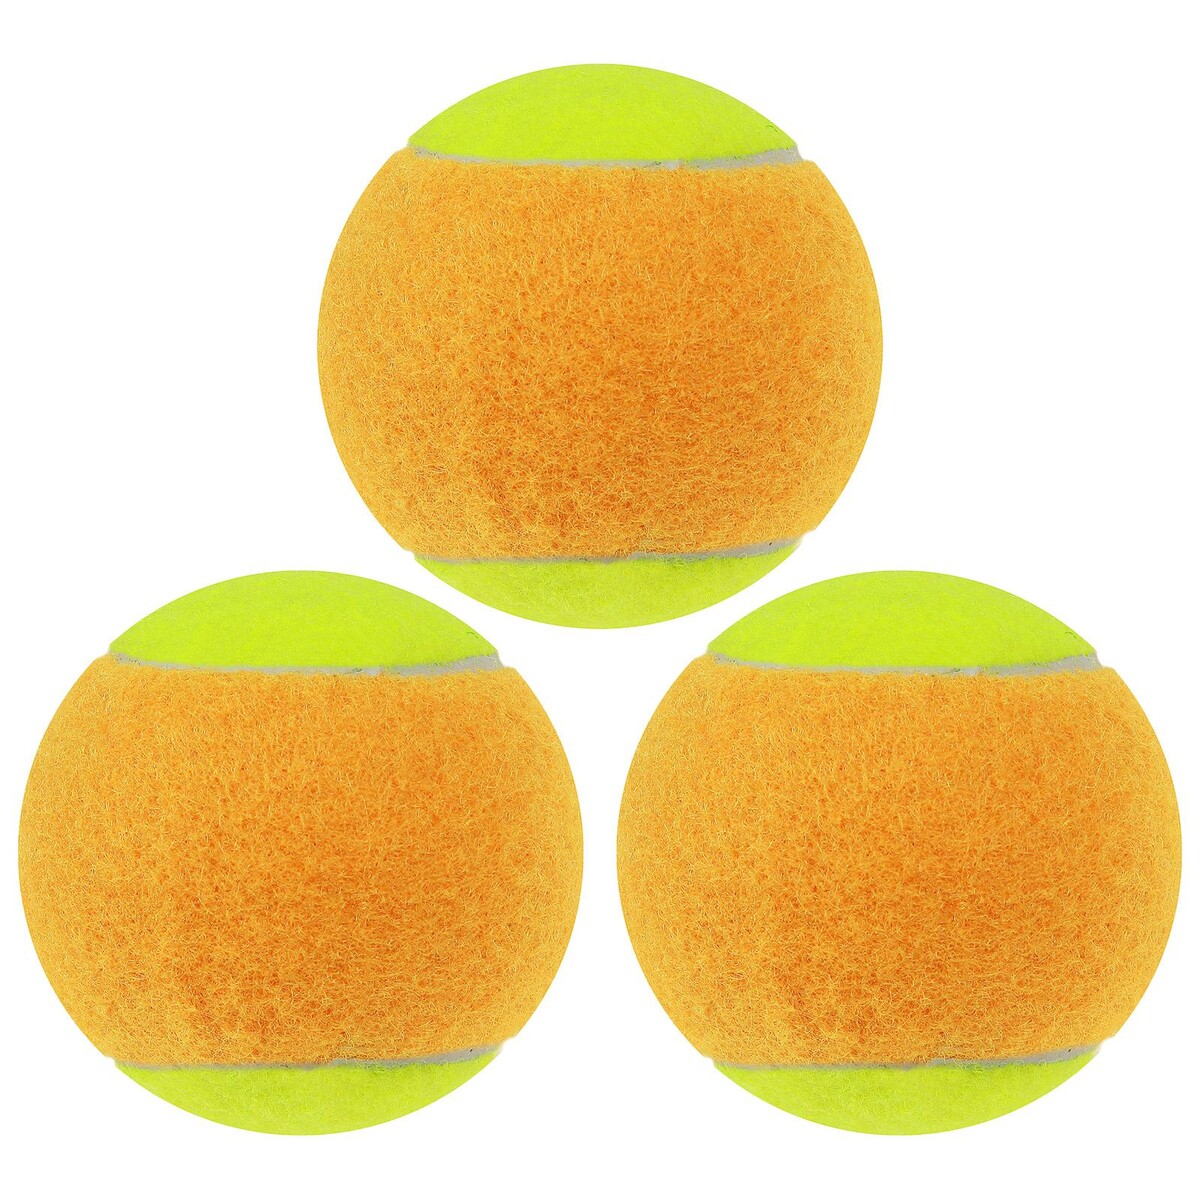 Набор мячей для большого тенниса onlytop swidon, 3 шт. набор мячей для настольного тенниса boshika beginner 1 d 40 мм 6 шт белый